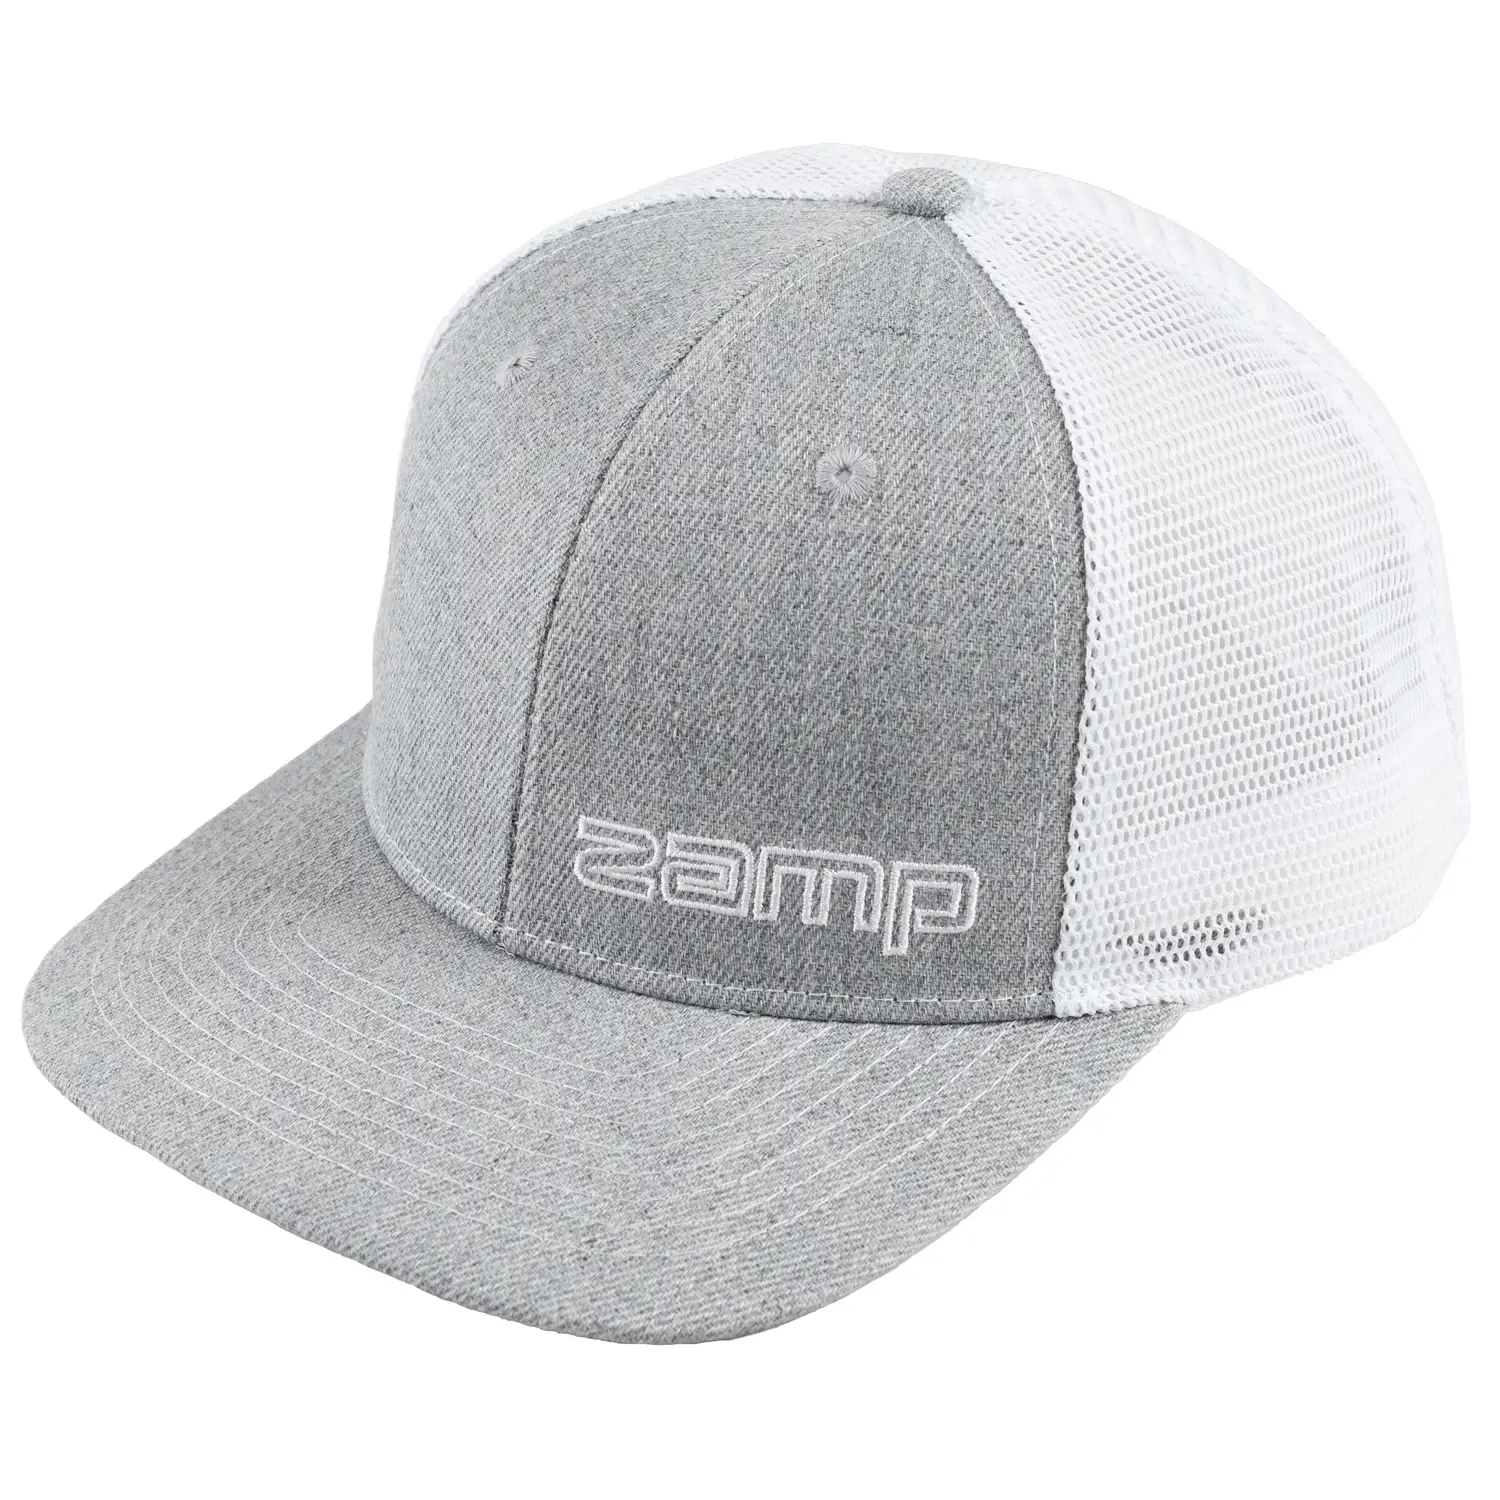 Zamp Racing Hat